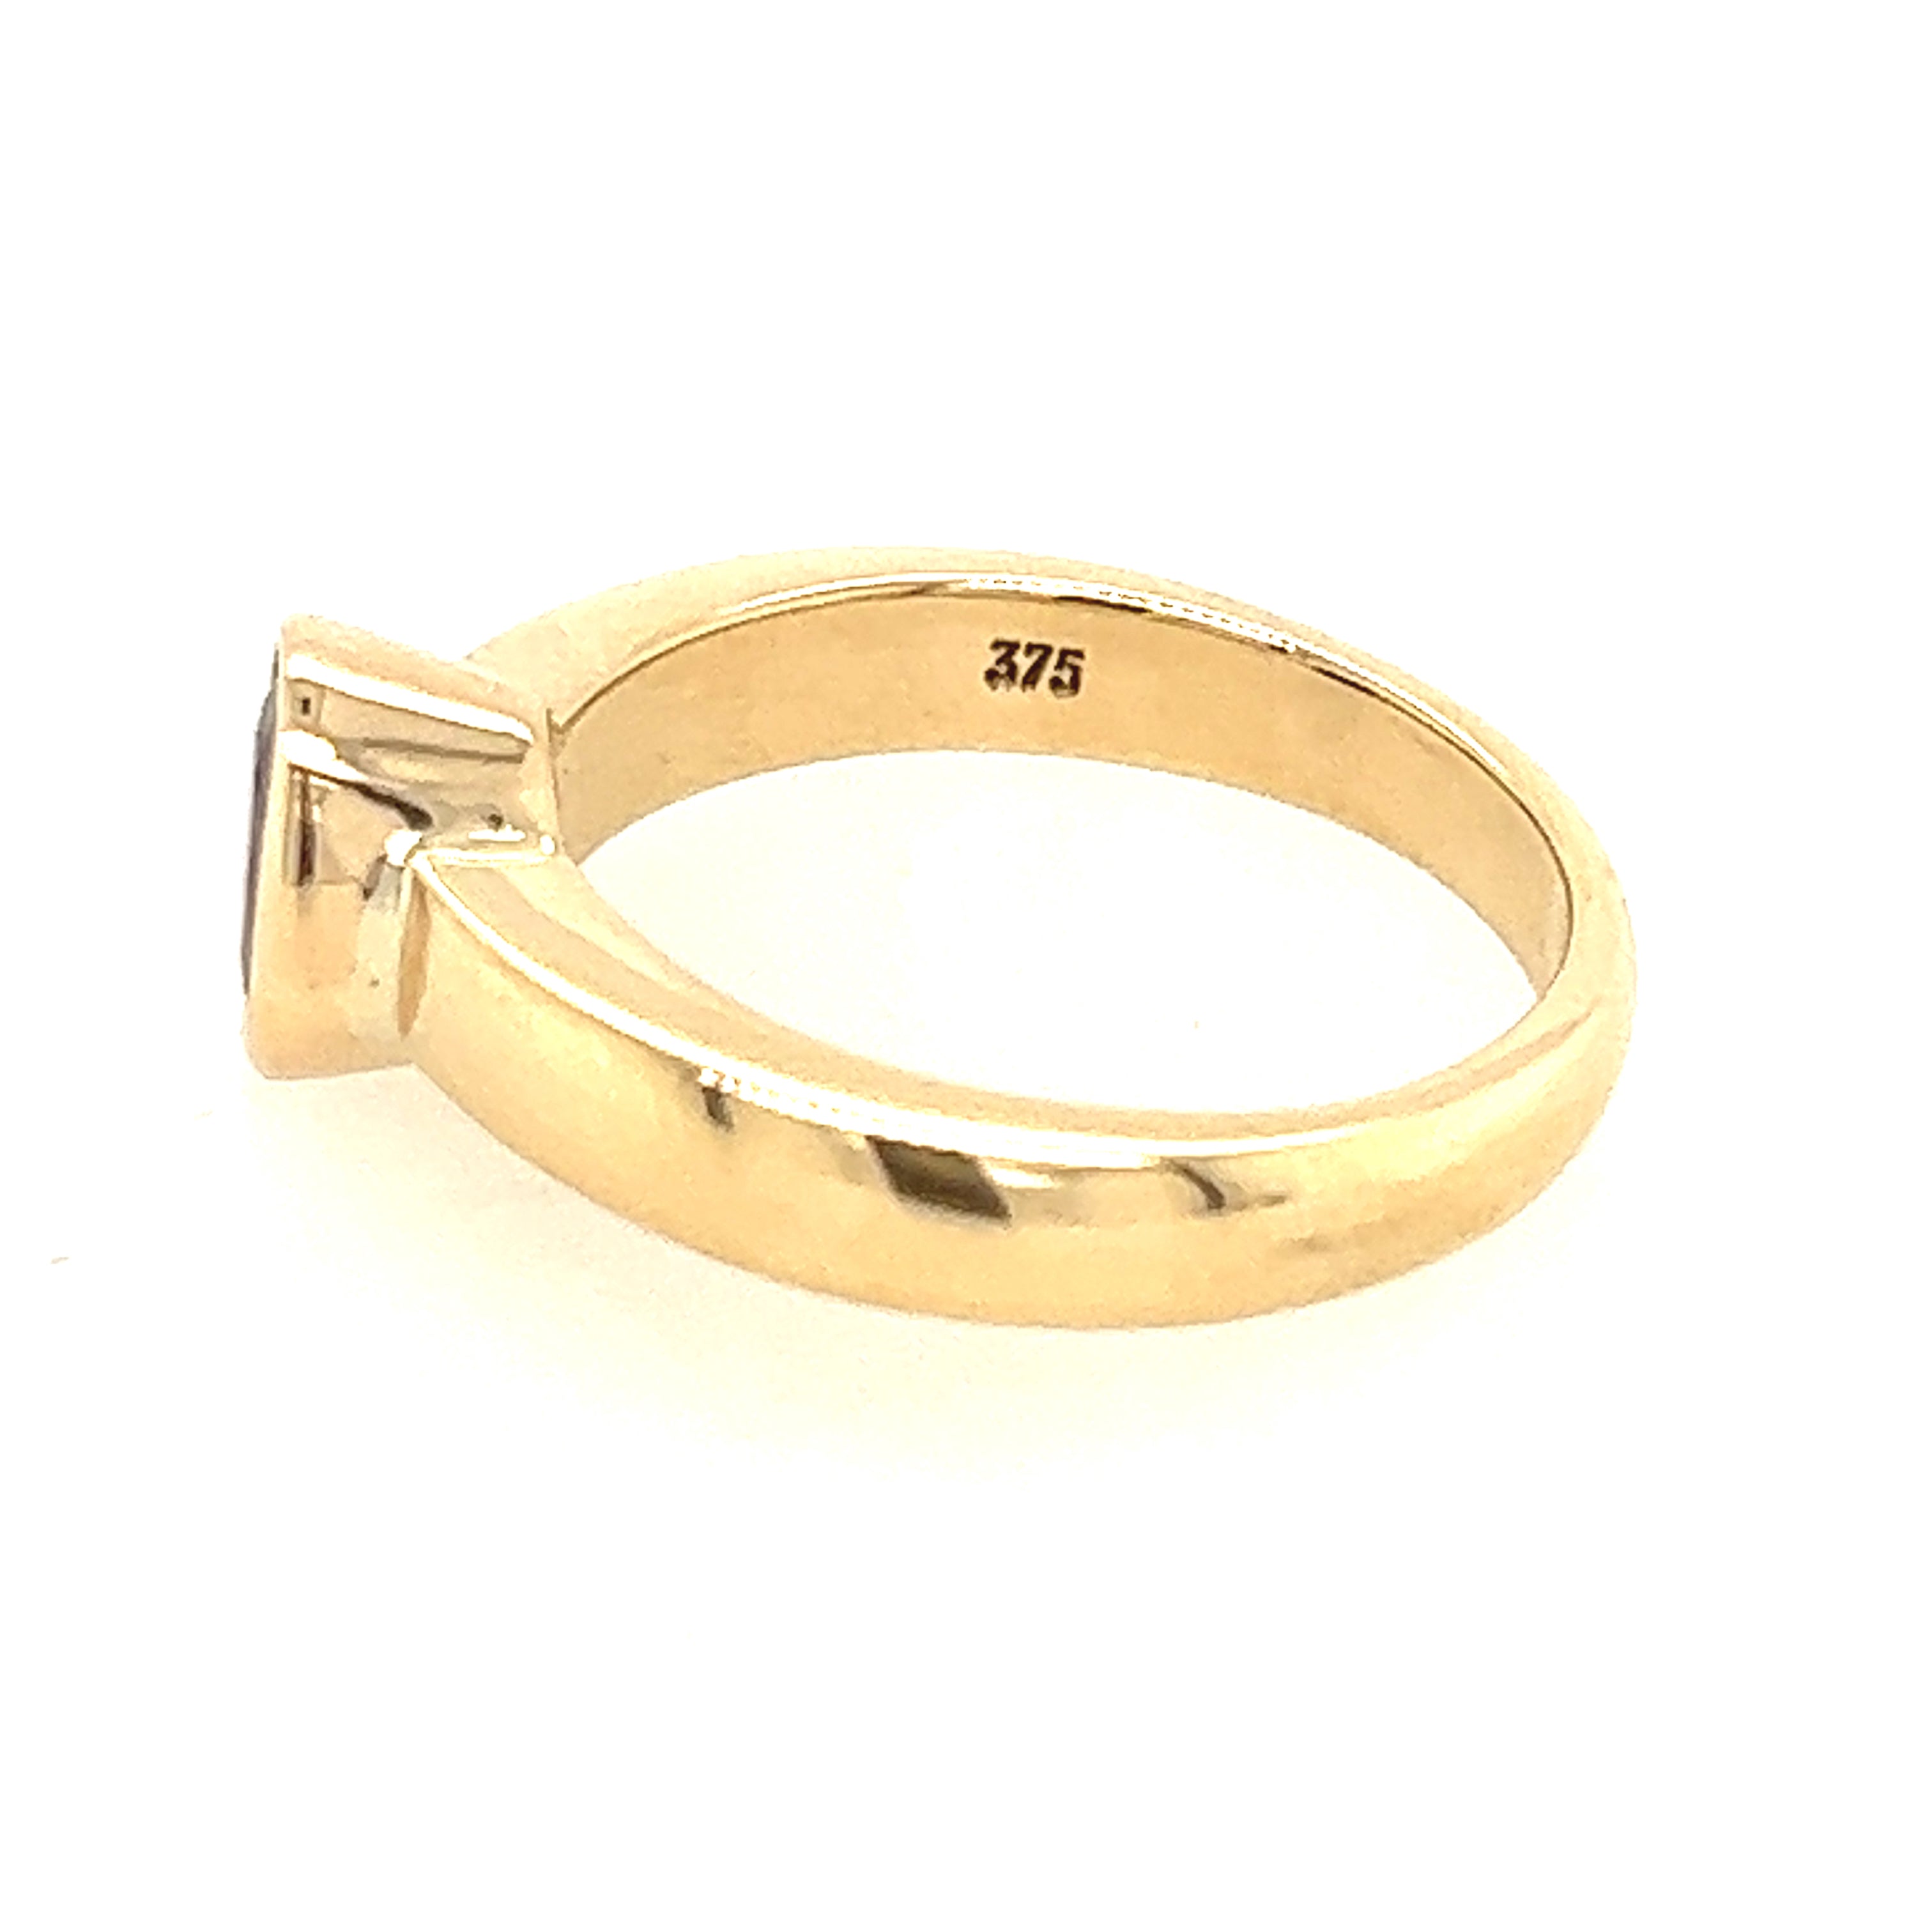 Stunning Yellow Gold Sapphire Ring